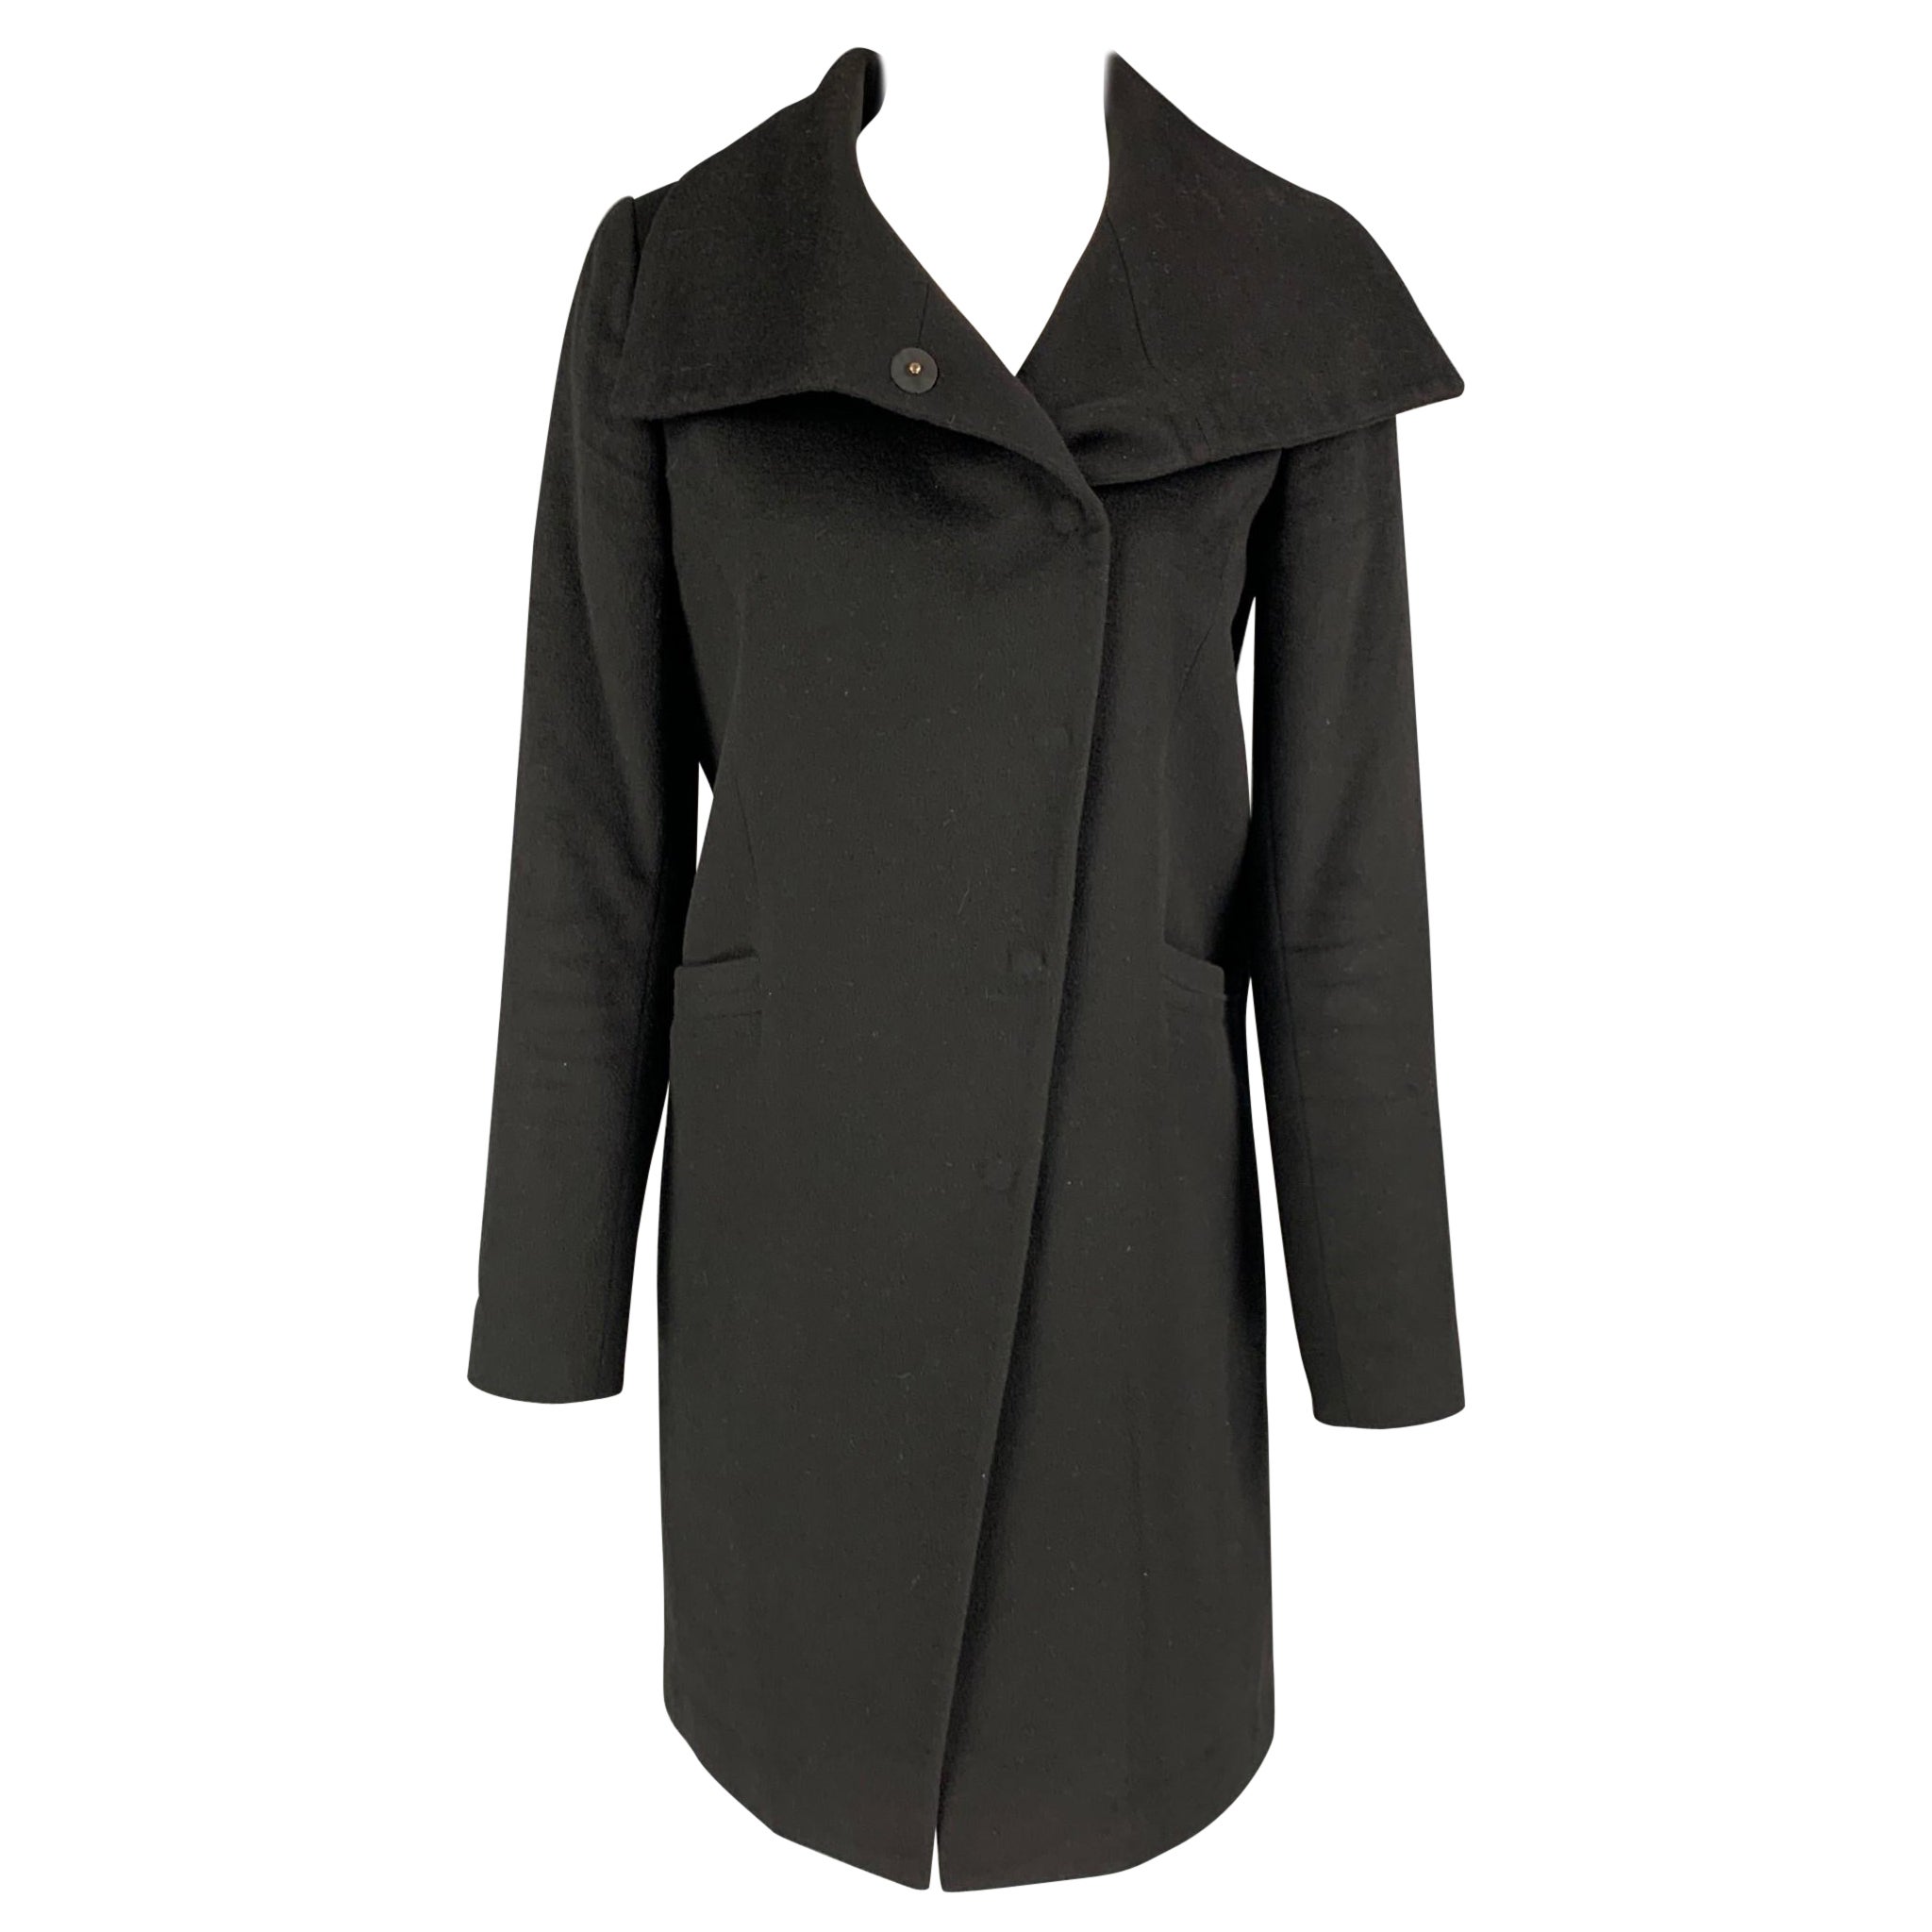 LAN JAENICKE Size S Black Cashmere Hidden Snaps Coat